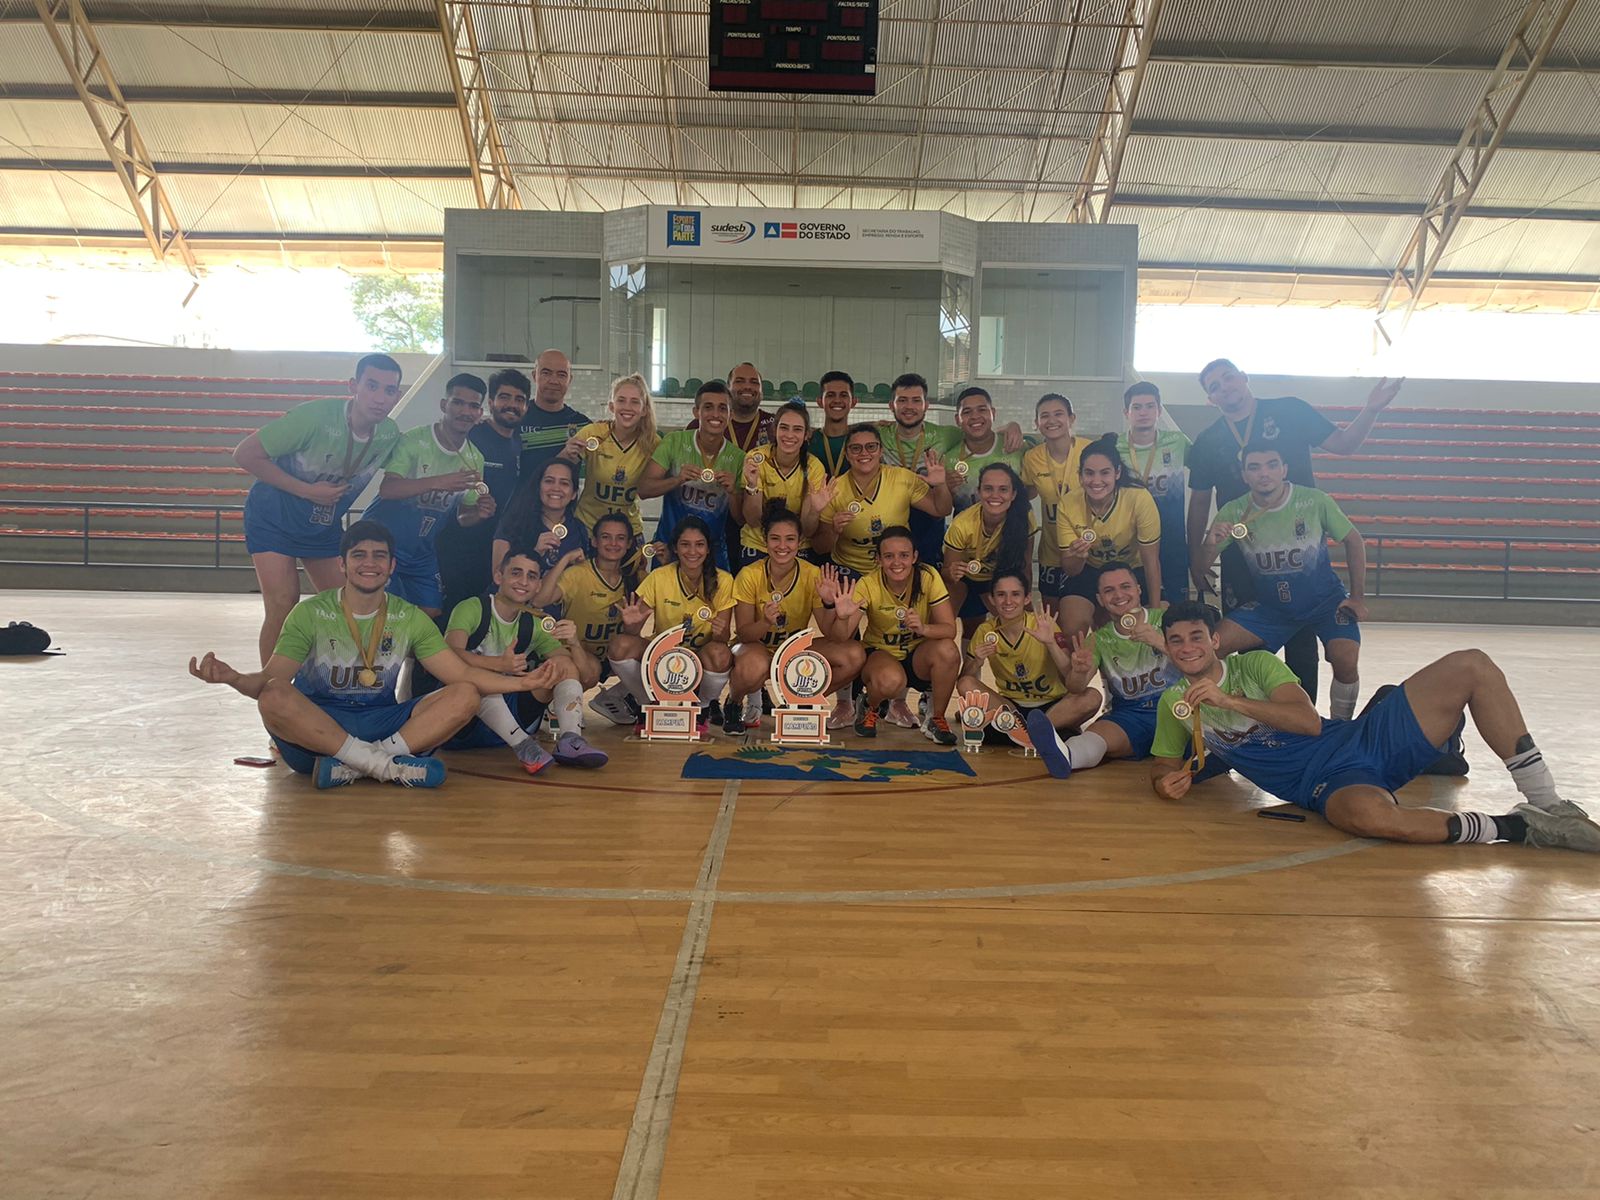 Seleção Feminina de Futsal - UFRN